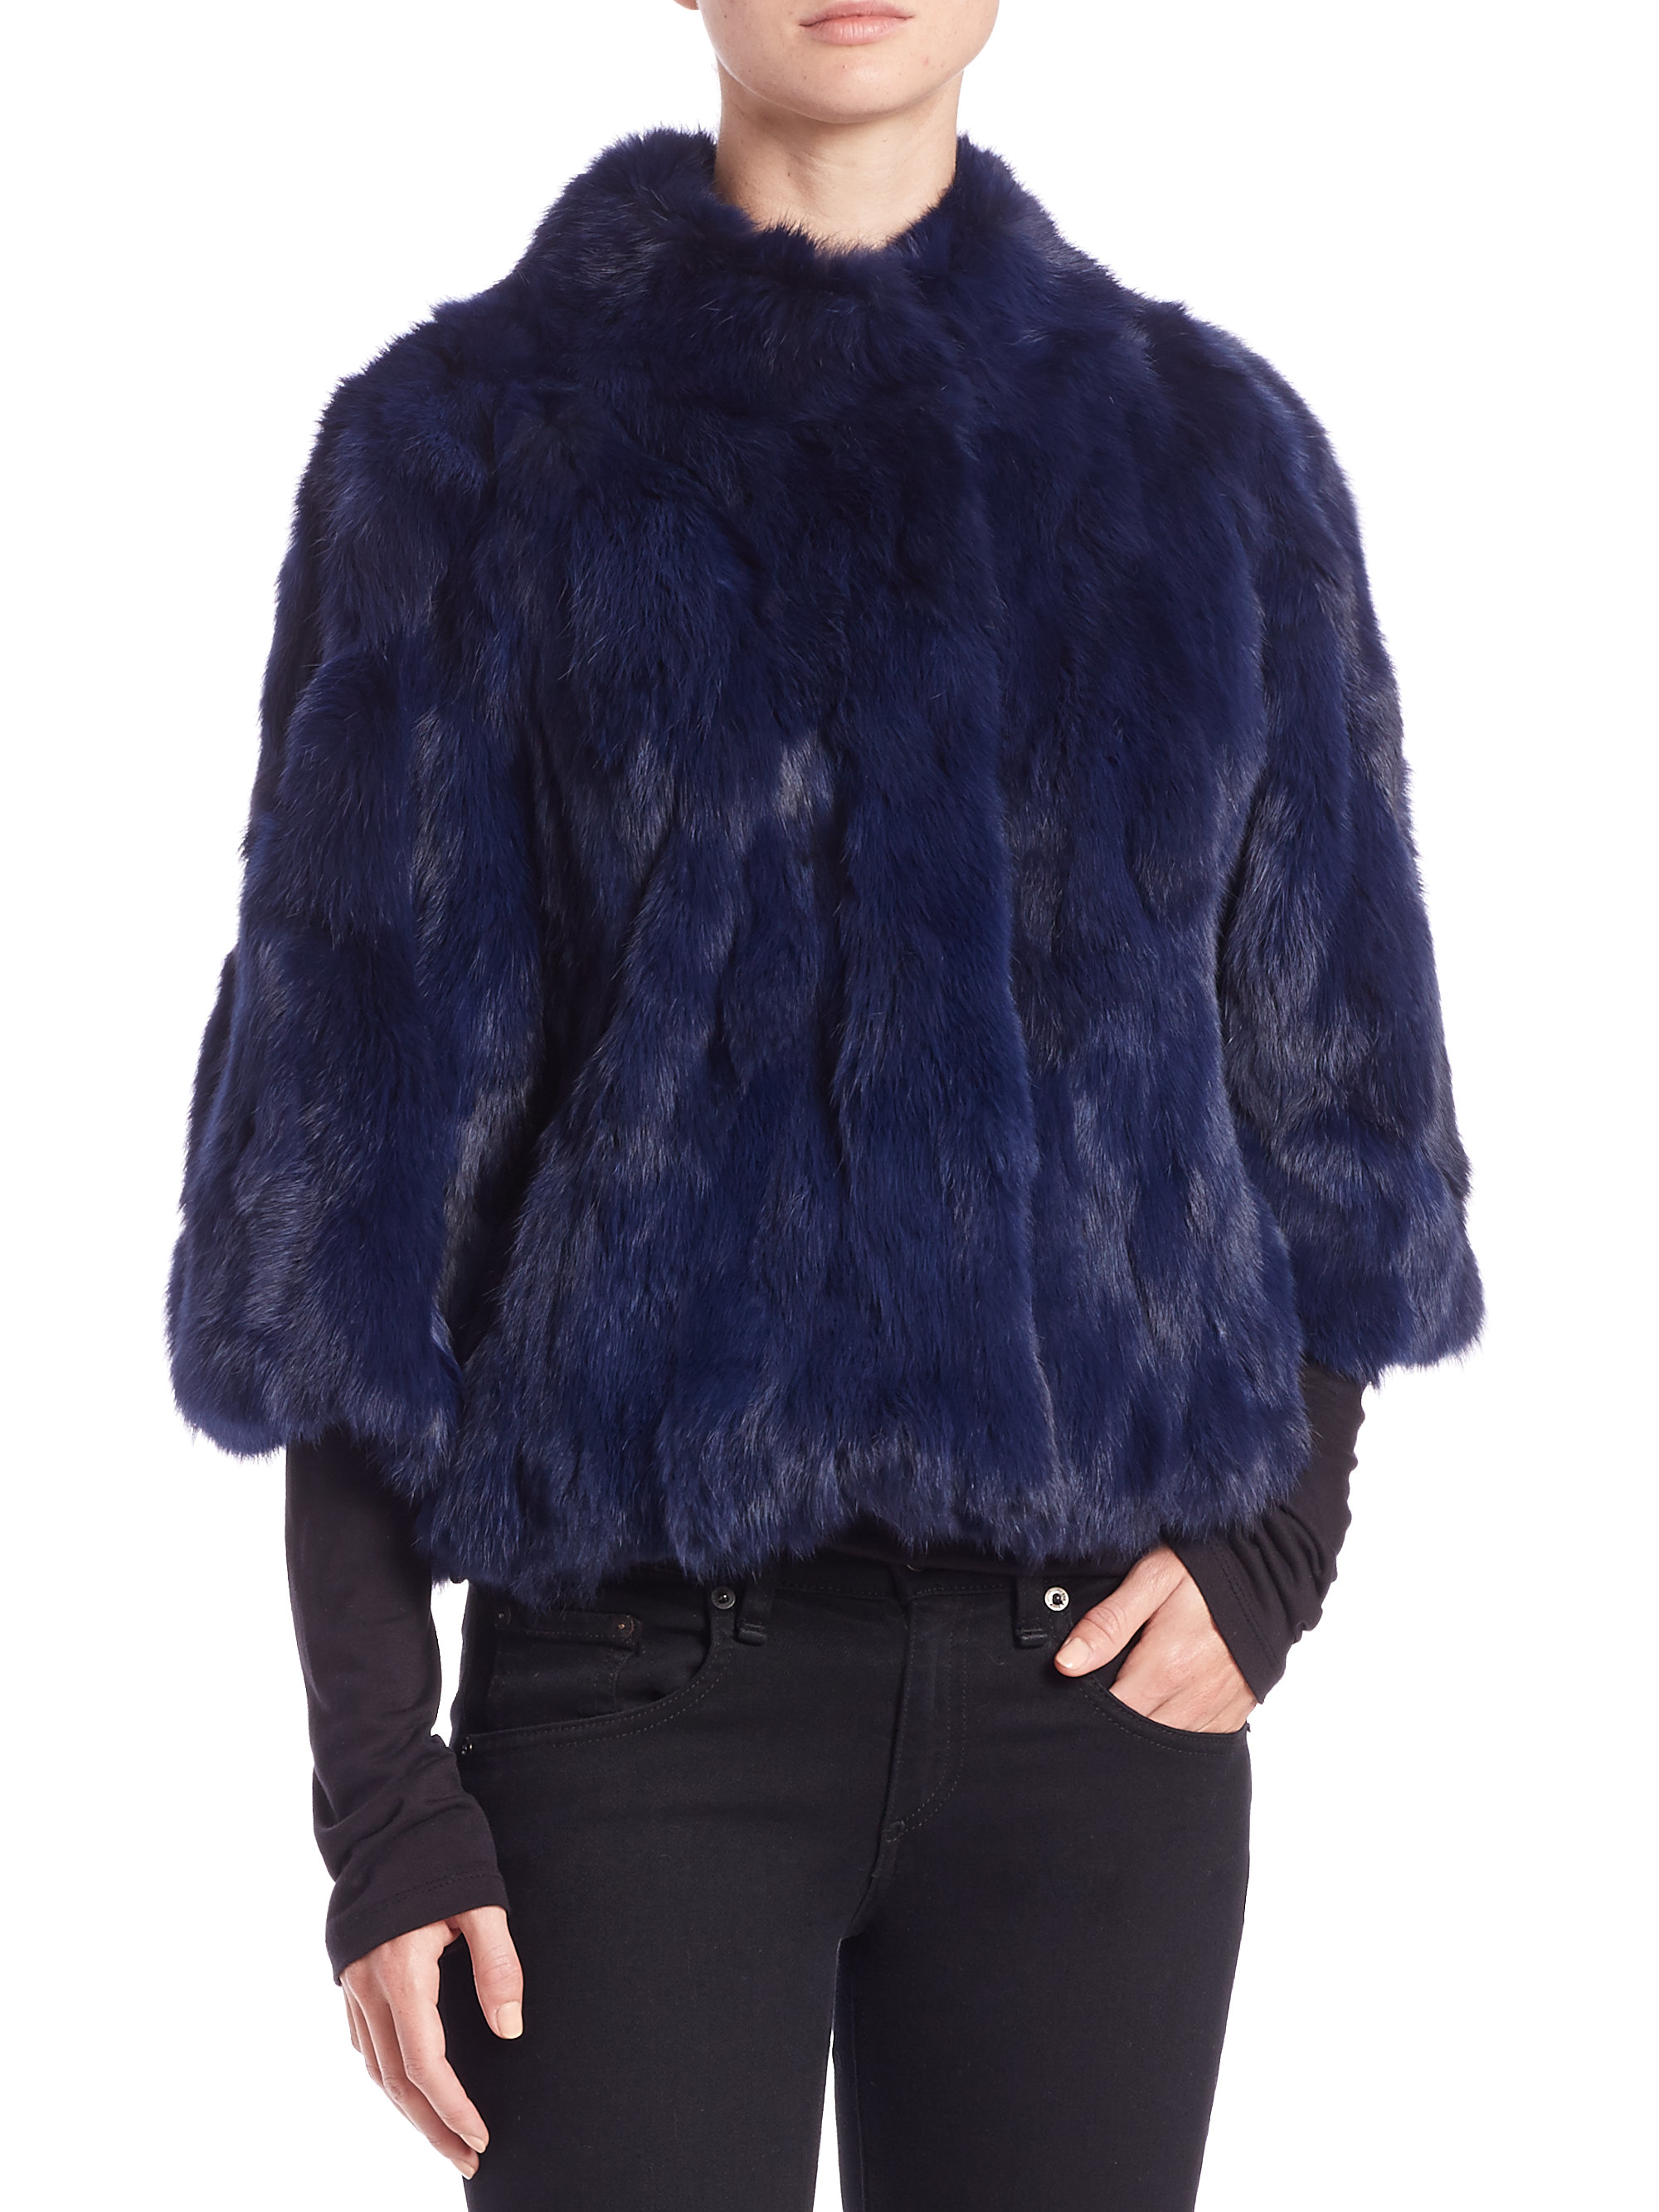 Lyst - Adrienne Landau Cropped Textured Rabbit Fur Jacket in Blue